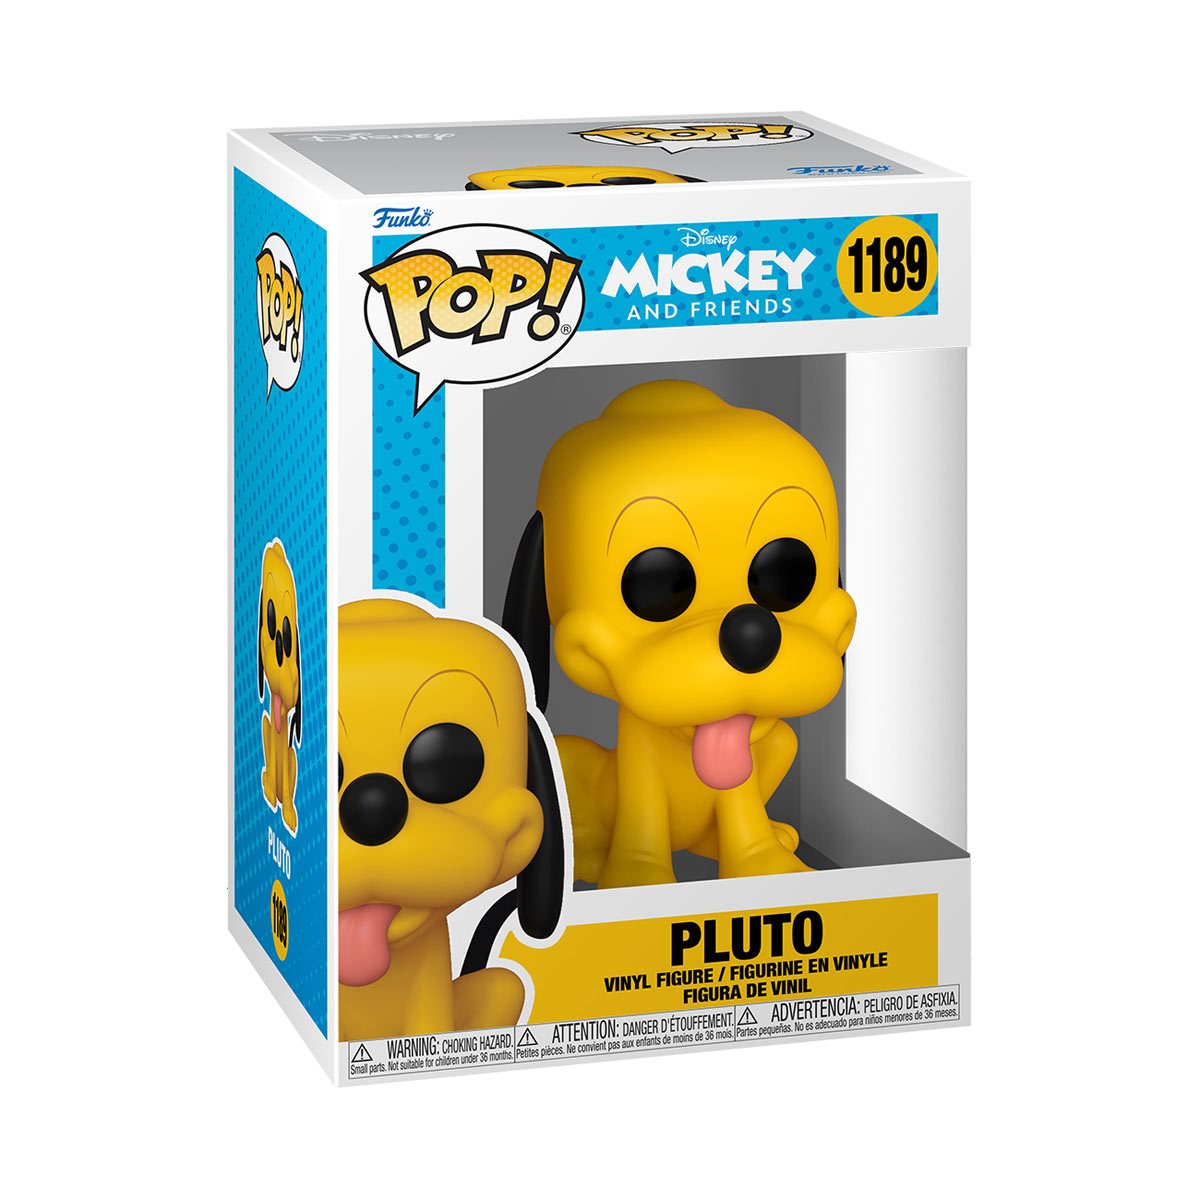 Funko Pop! Disney Classics Pluto Pop! Vinyl Figure